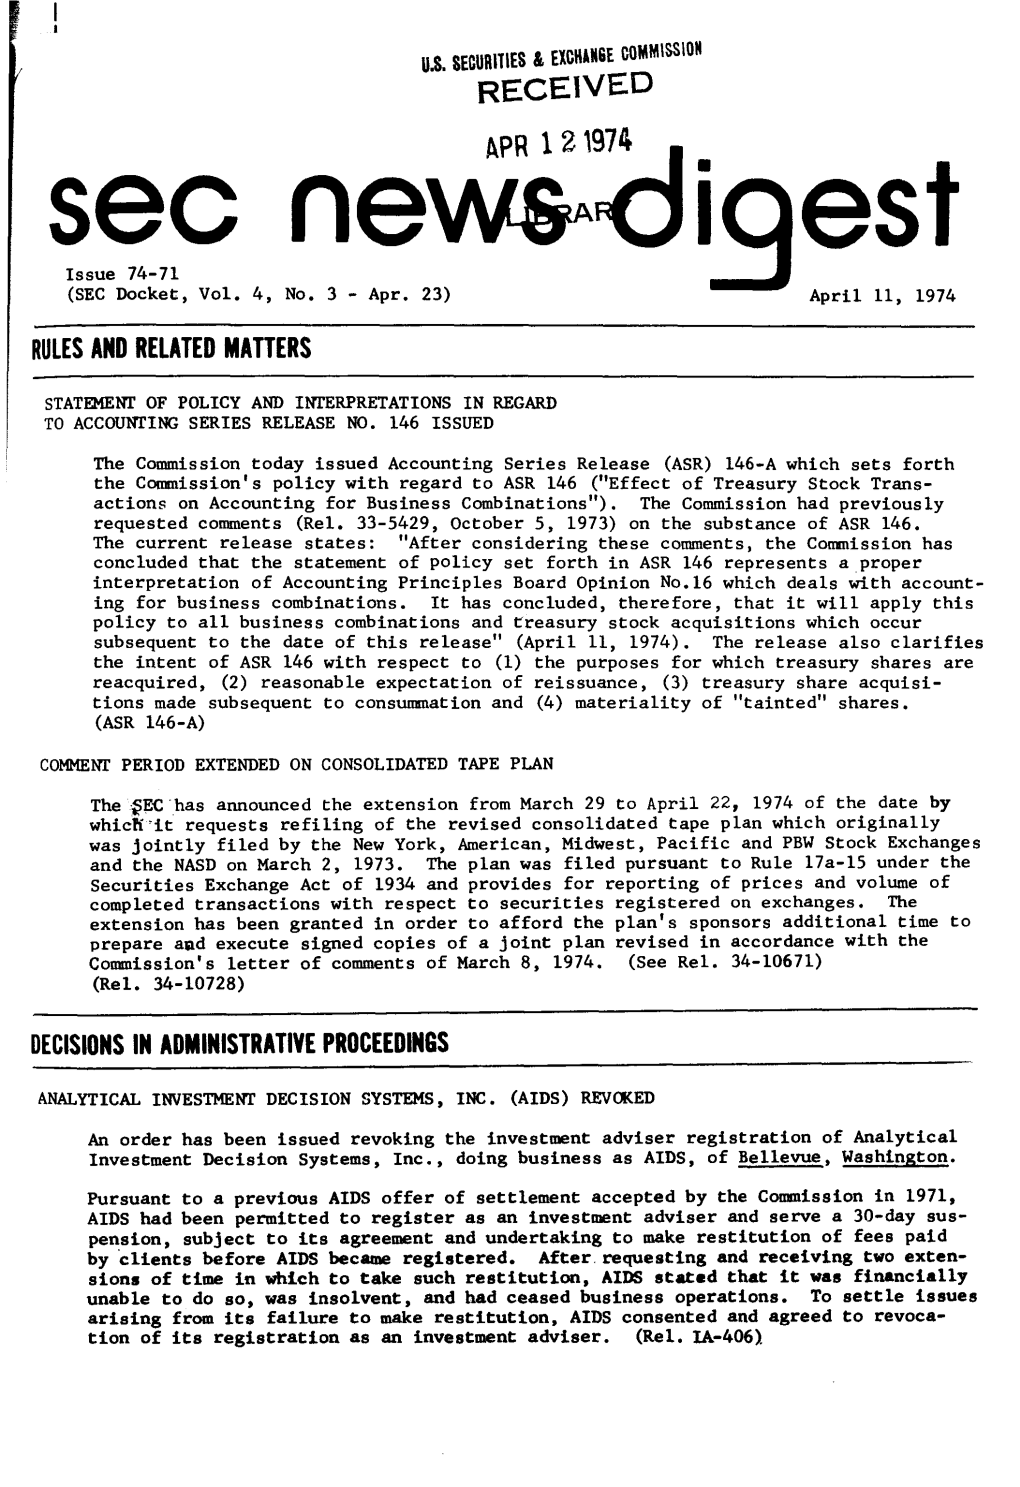 SEC News Digest, 04-11-1974